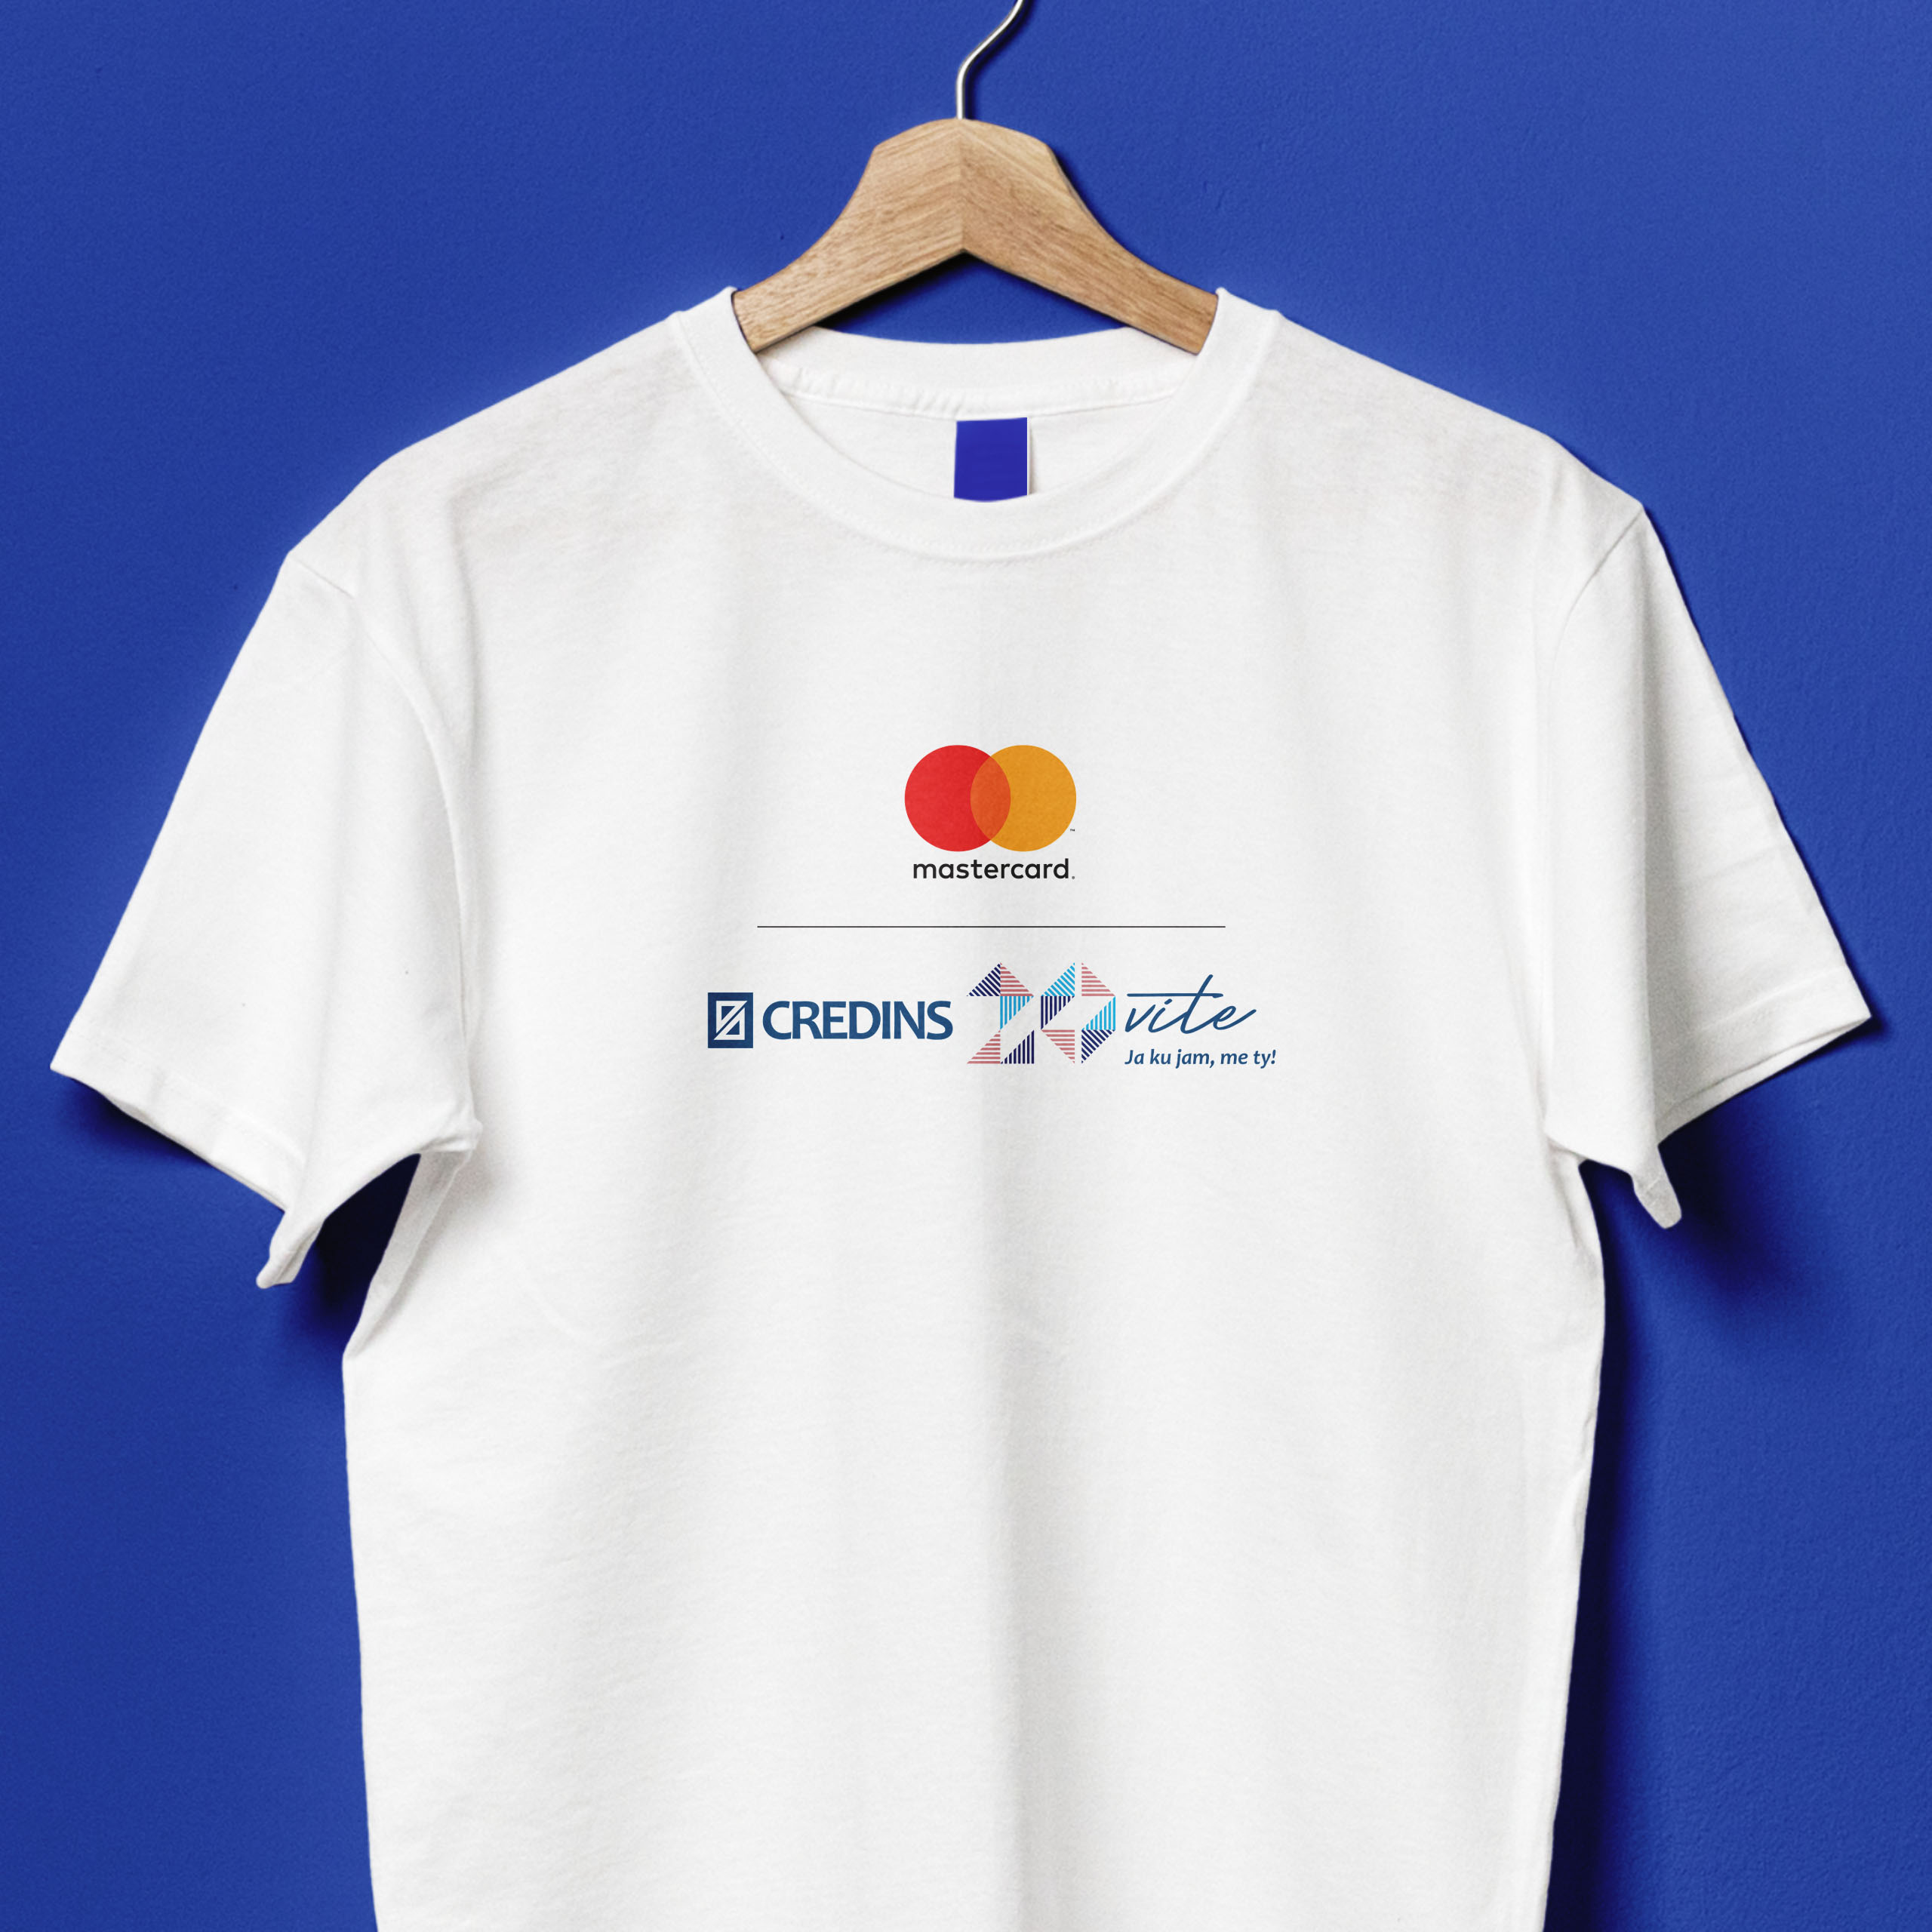 credins-mastercard-shirt-design-branding-vatra